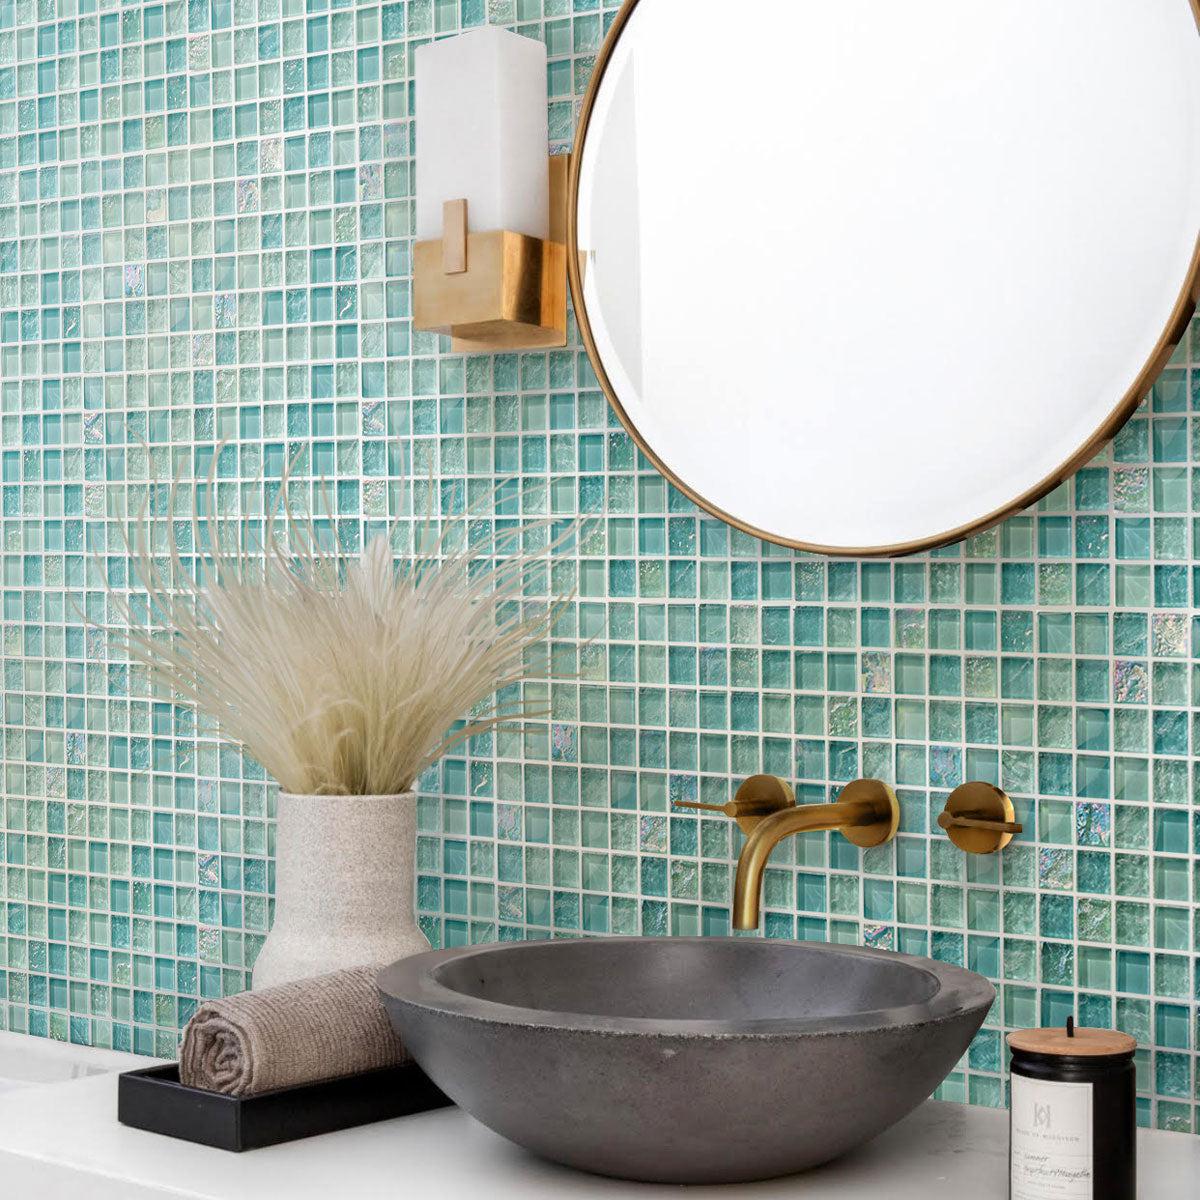 Inagua Glass Square Tiles create a stunning, serene bathroom oasis